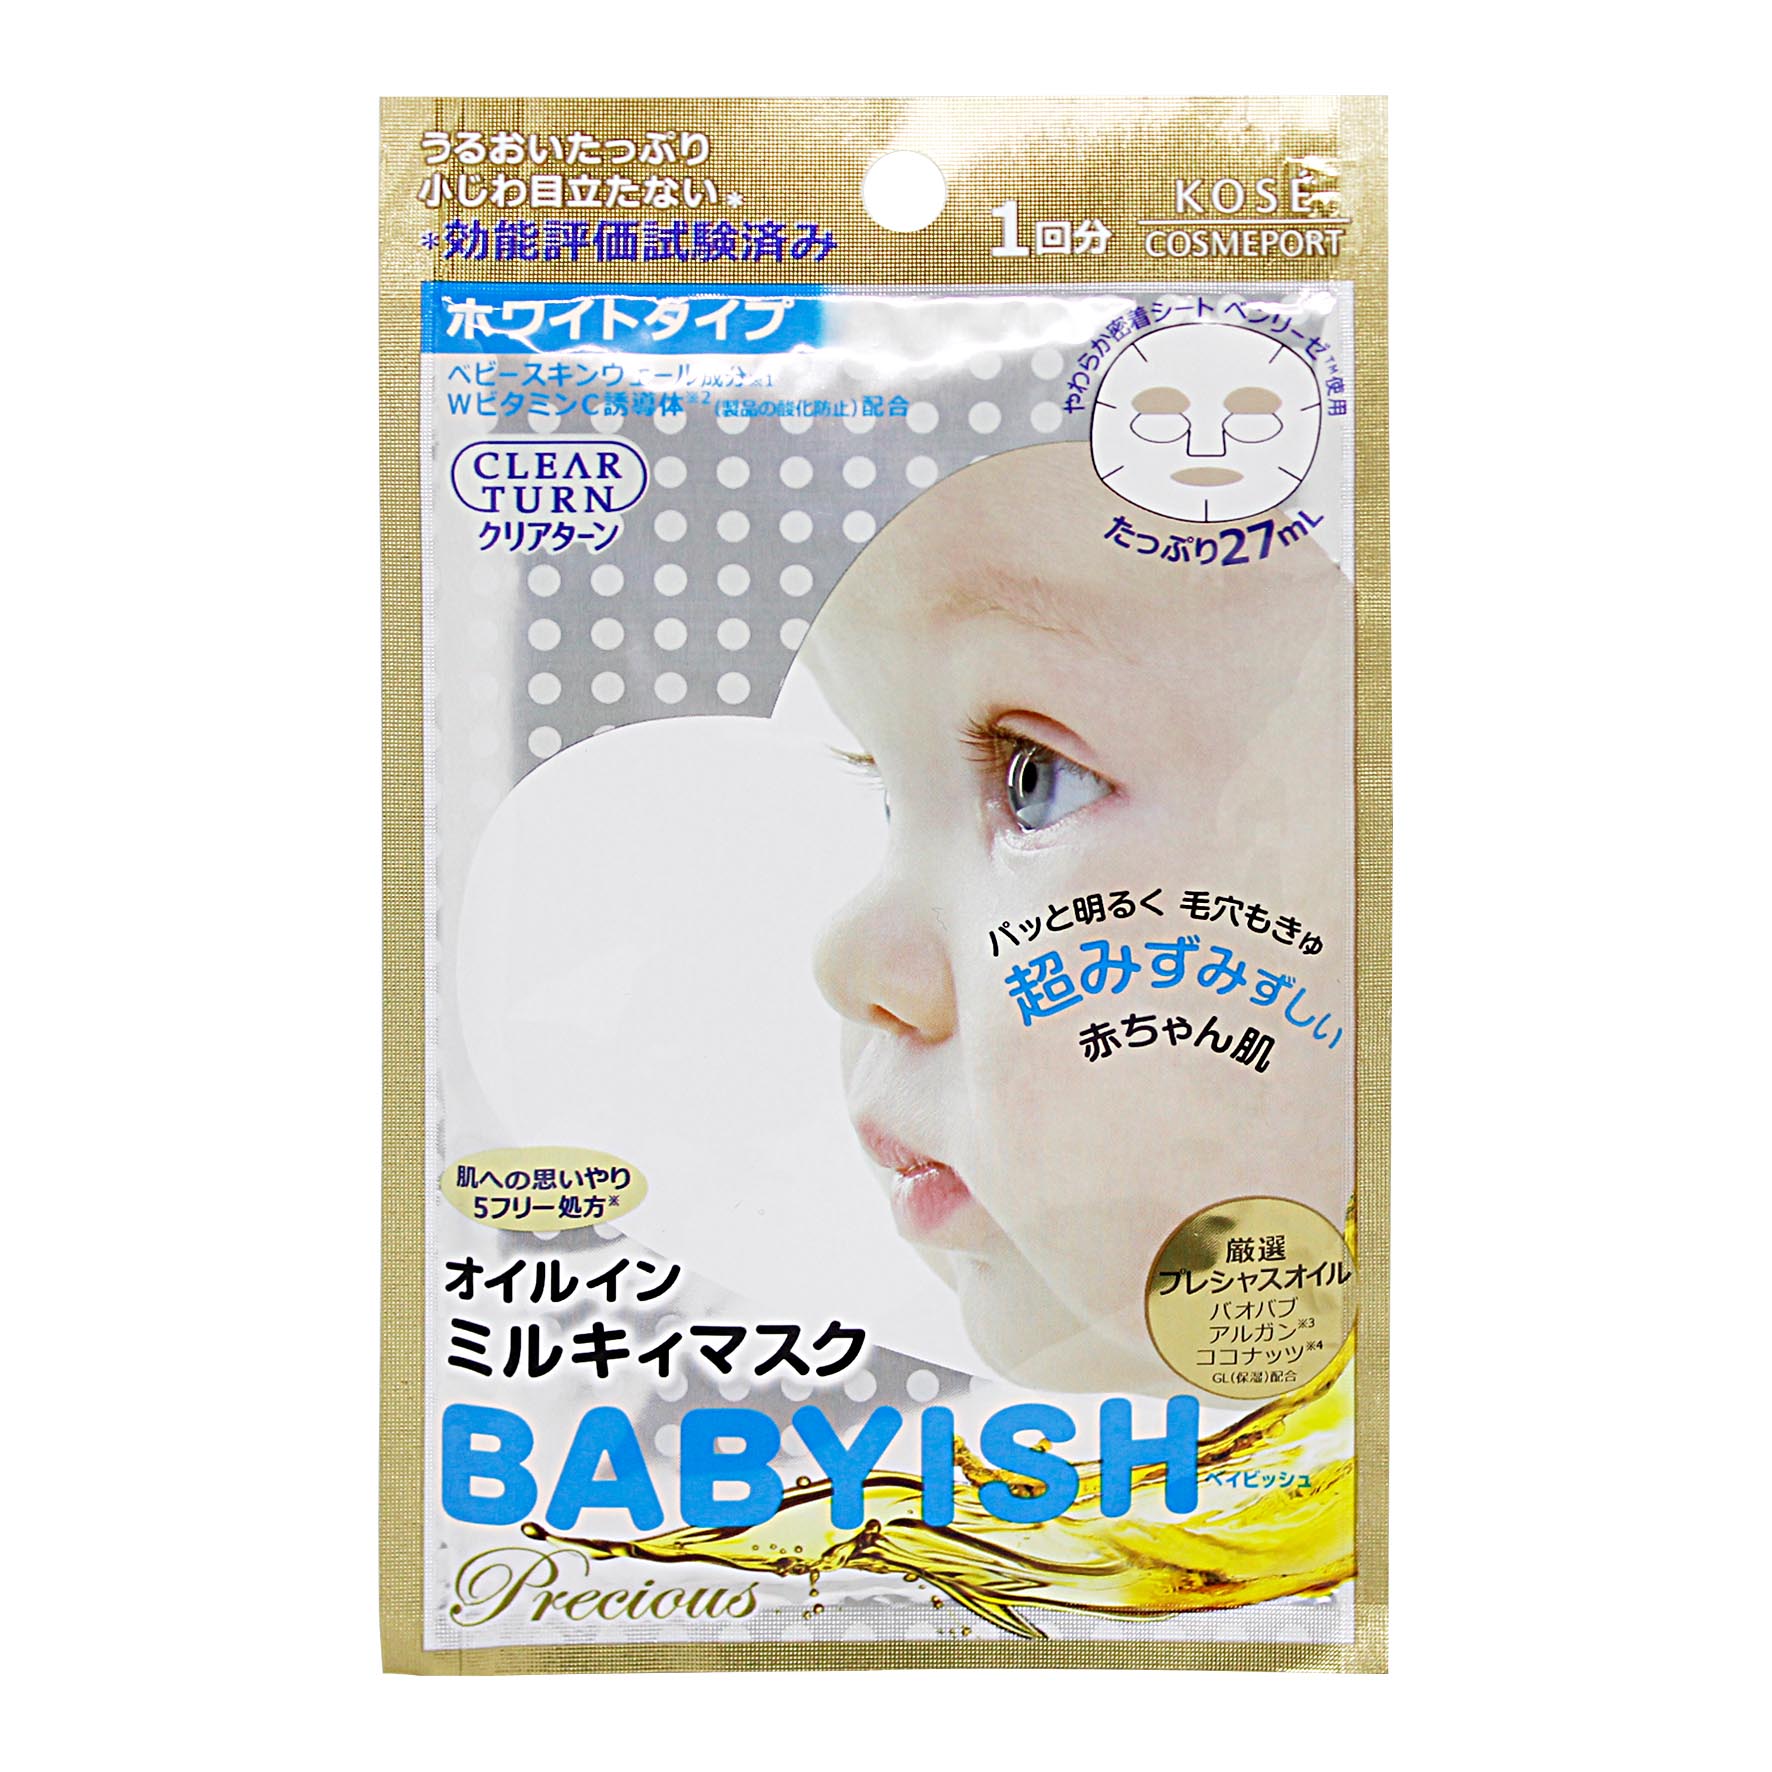 Kose Cosmeport Kose Clear Turn Babyish Precious Mask C